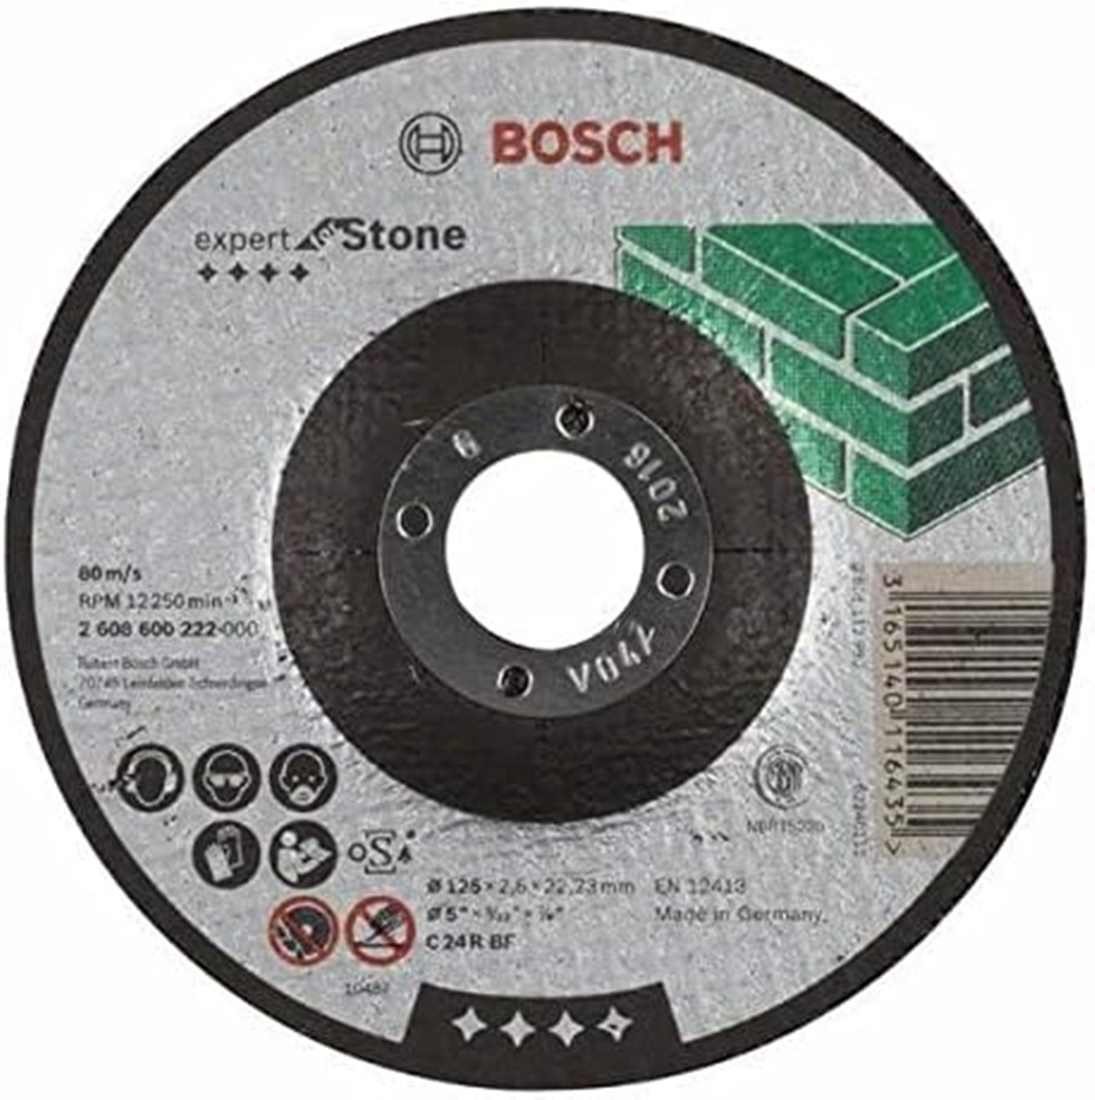 mm Granit, Ø 125 Stein, R mm, BF, C BOSCH 24 2.5 Expert Bosch Trennscheibe Bohrfutter